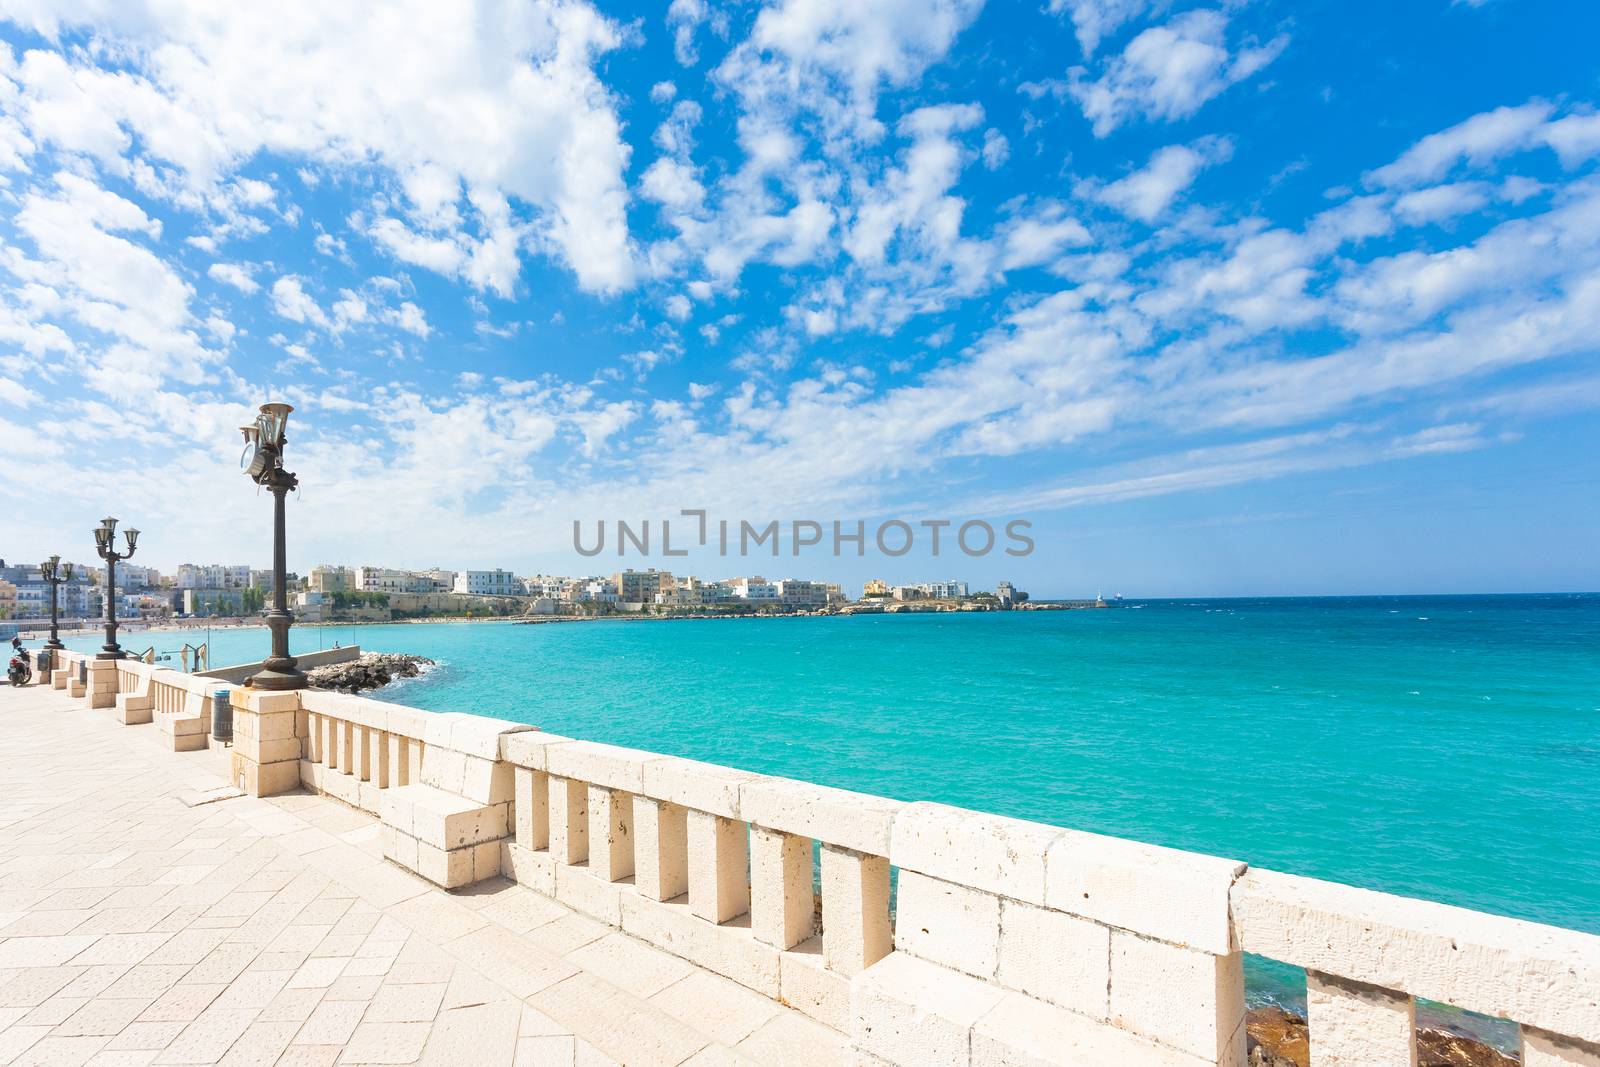 Otranto, Apulia - Lookout from the promenade of Otranto in Italy by tagstiles.com